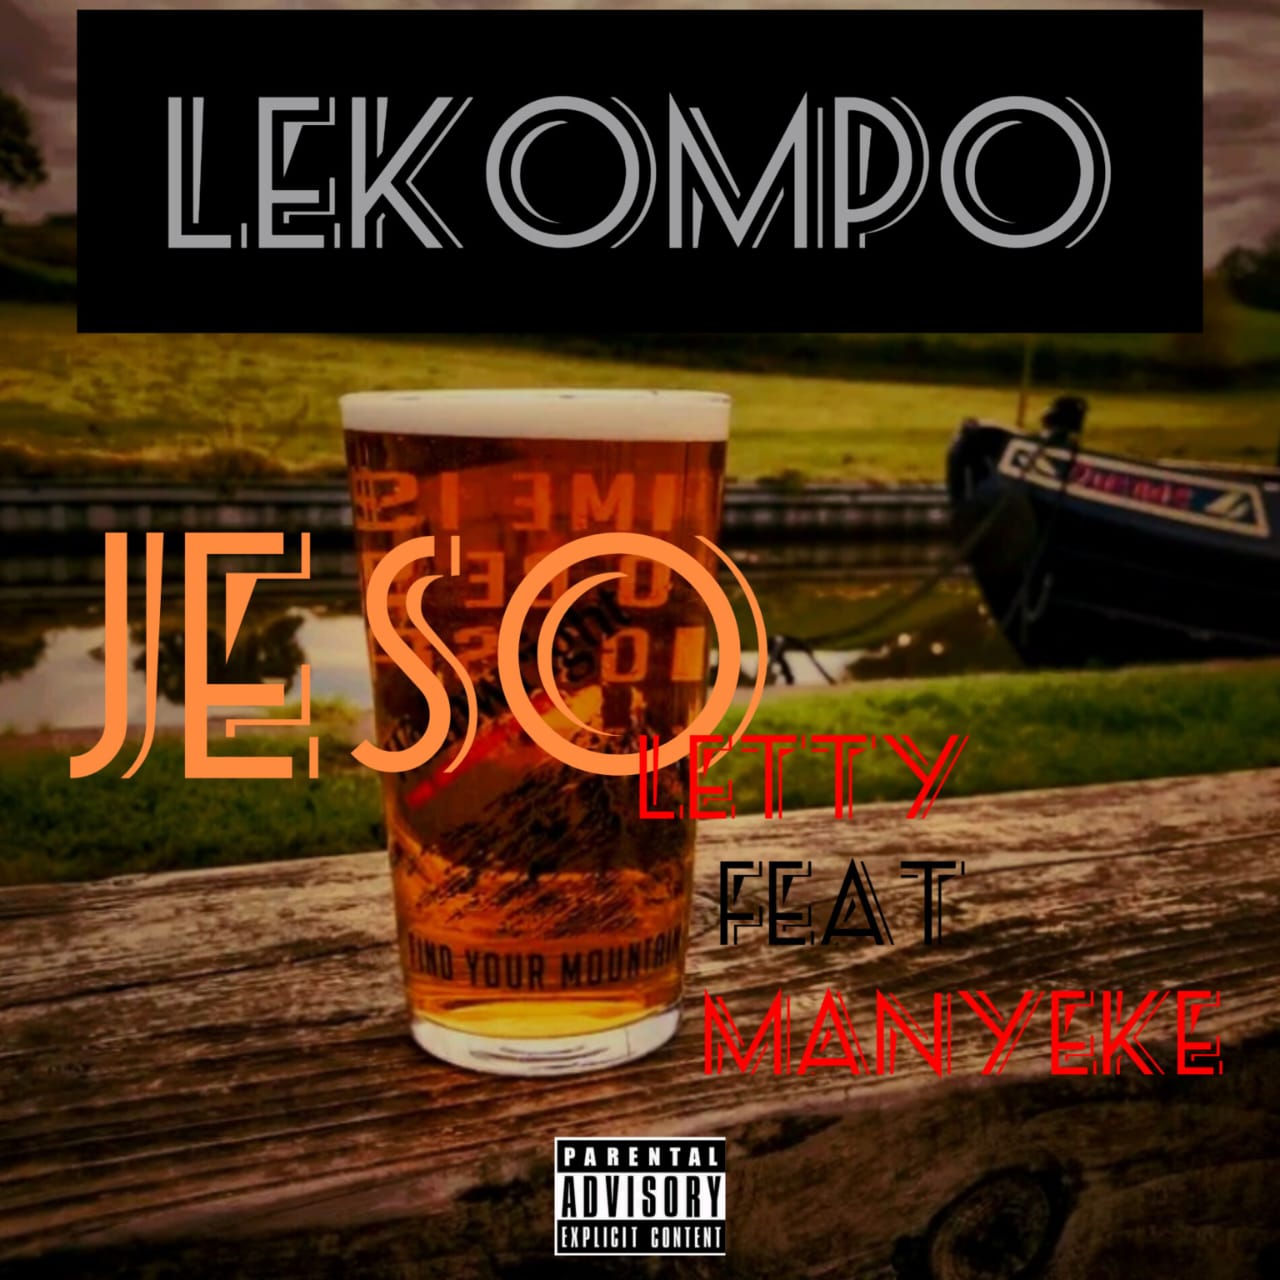 Jeso (Lekompo) - Letty & Manyeke